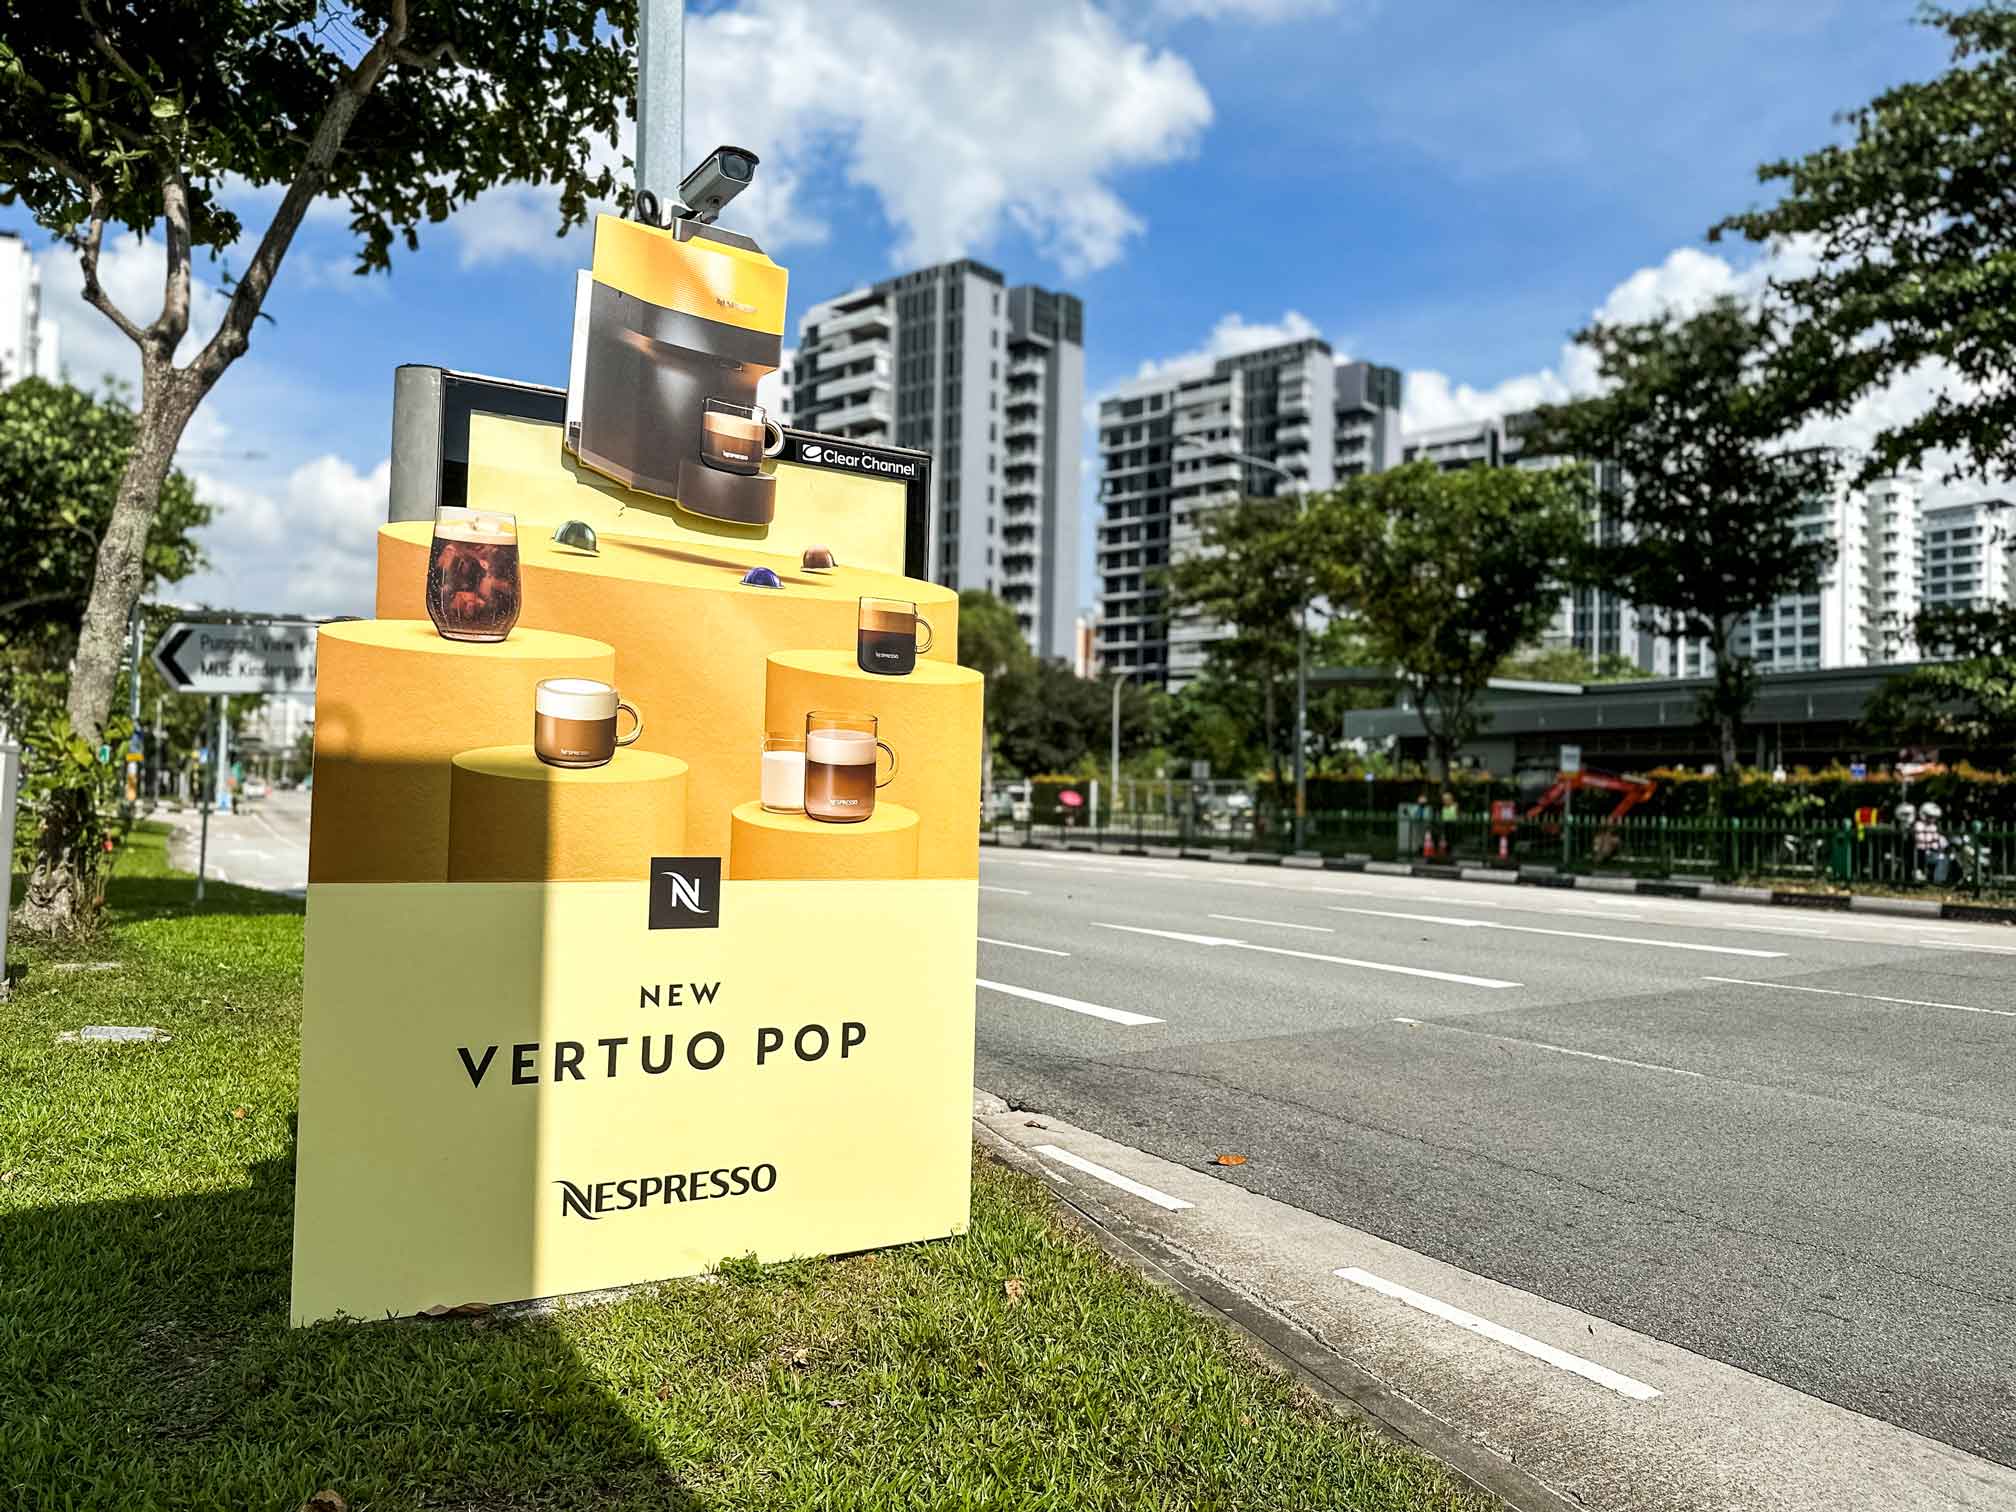 Nespresso's Vertuo Pop Launch: An Unforgettable 3D Street Adventure!